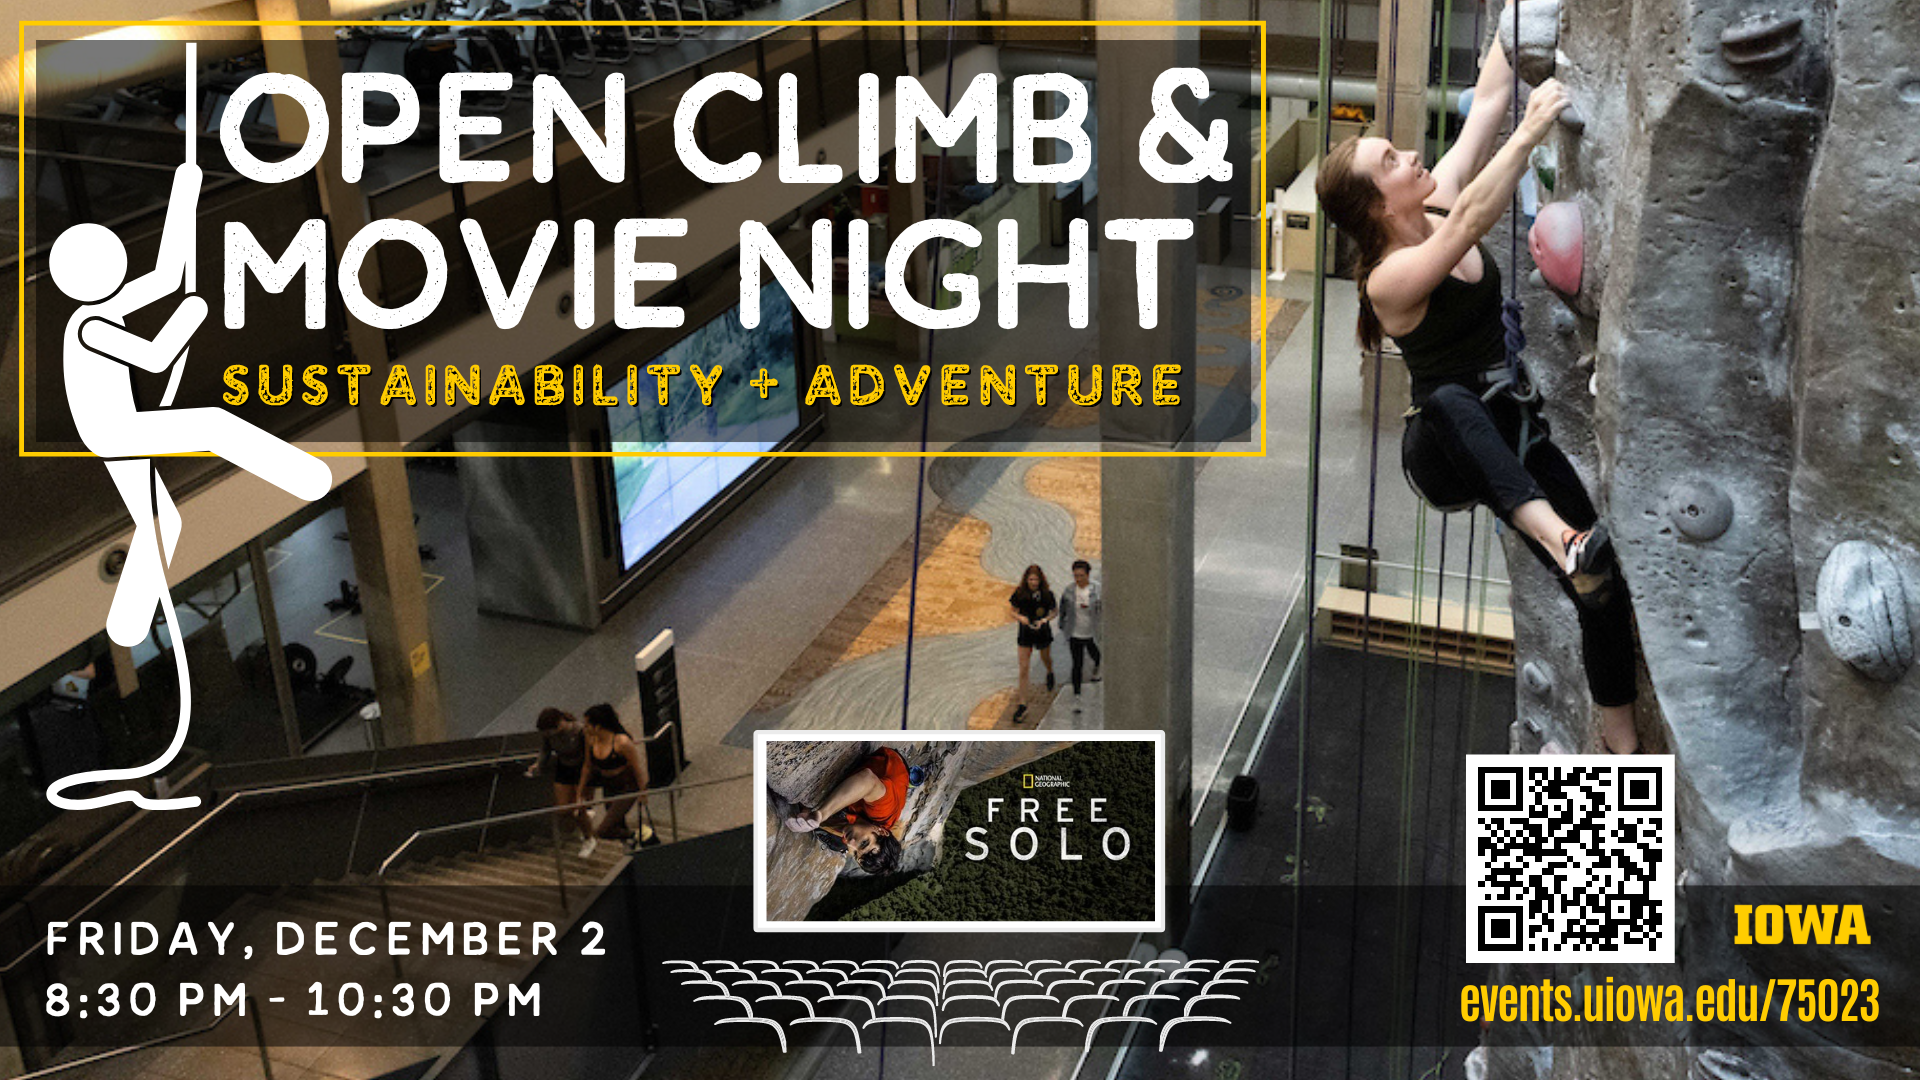 Open climb and movie